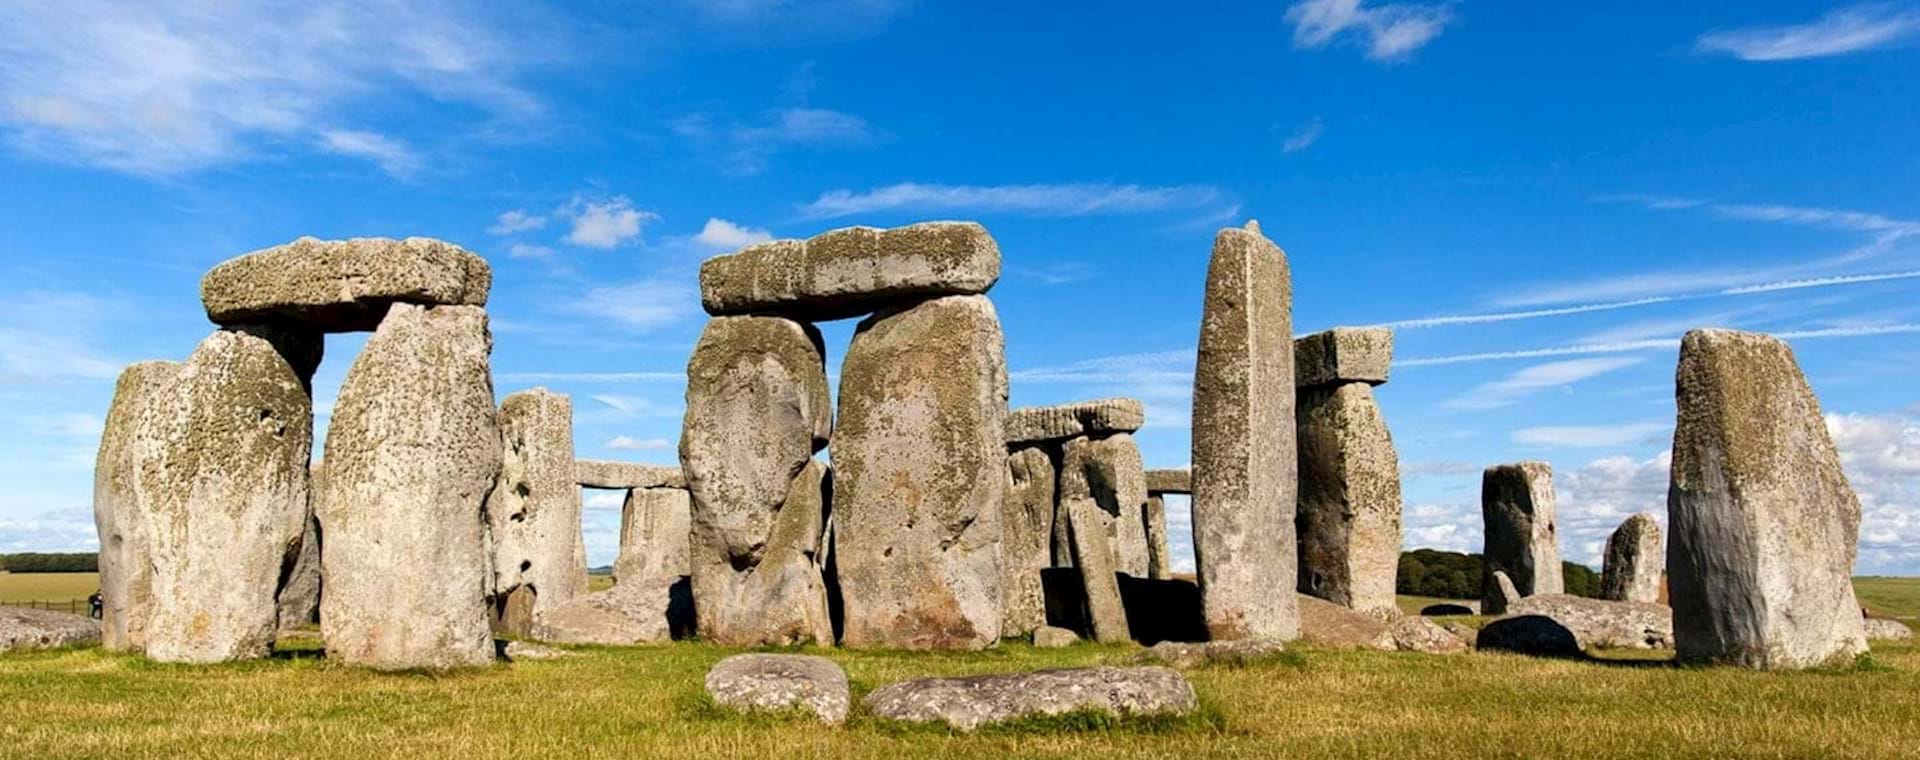 stonehenge tour from london